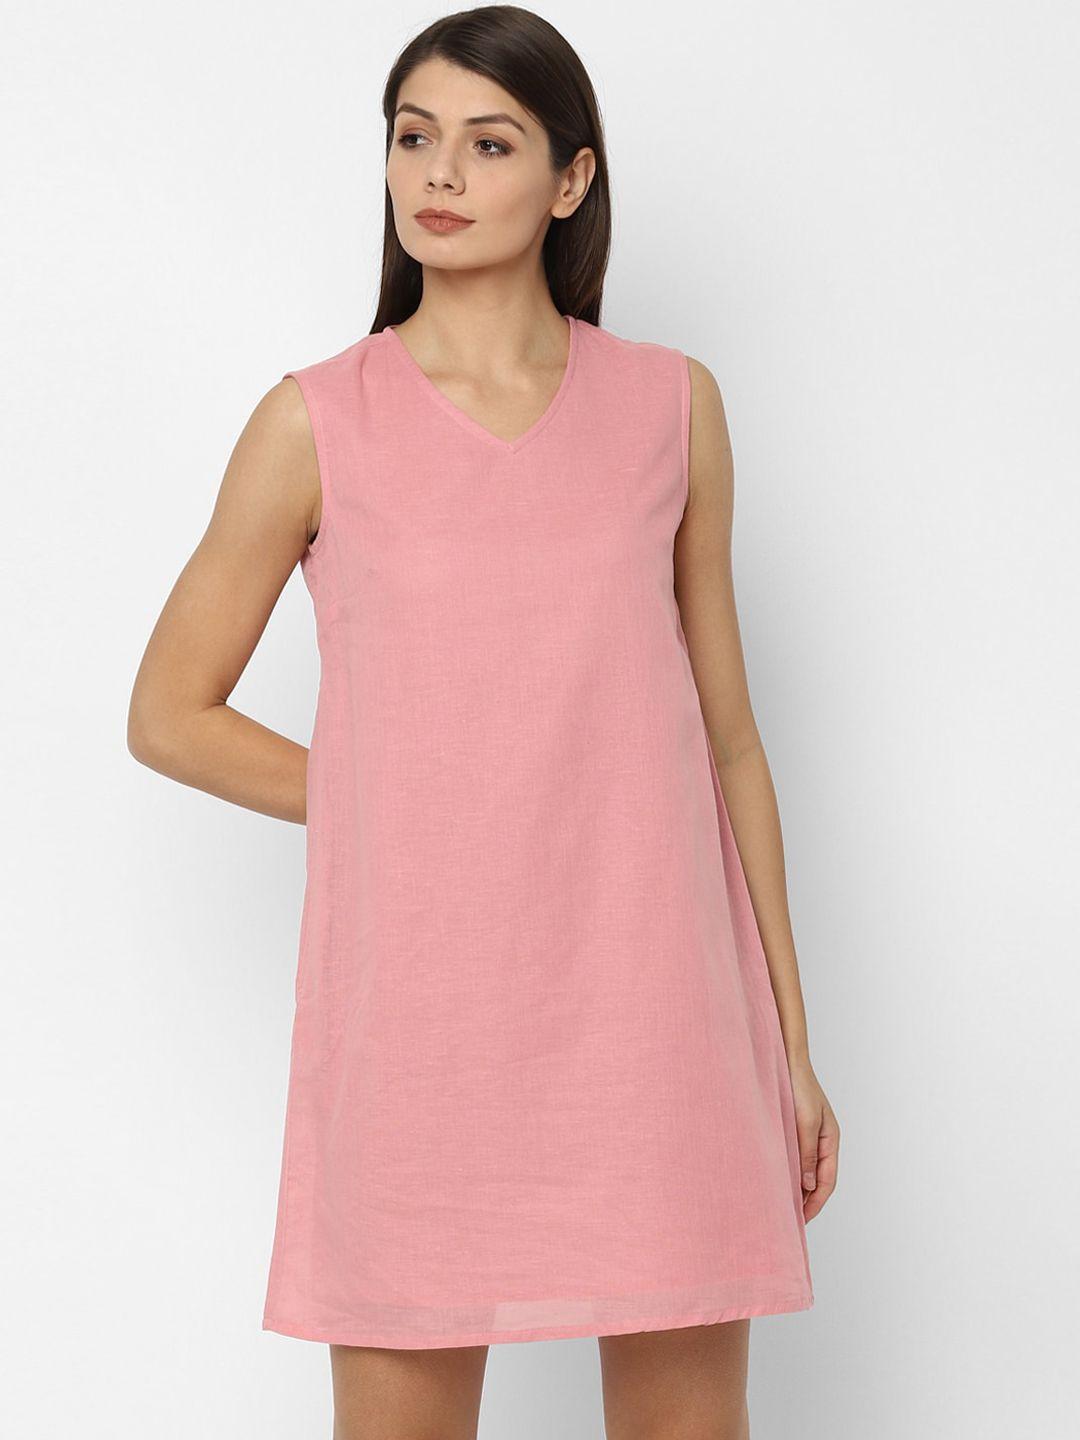 allen solly woman women pink solid a-line dress